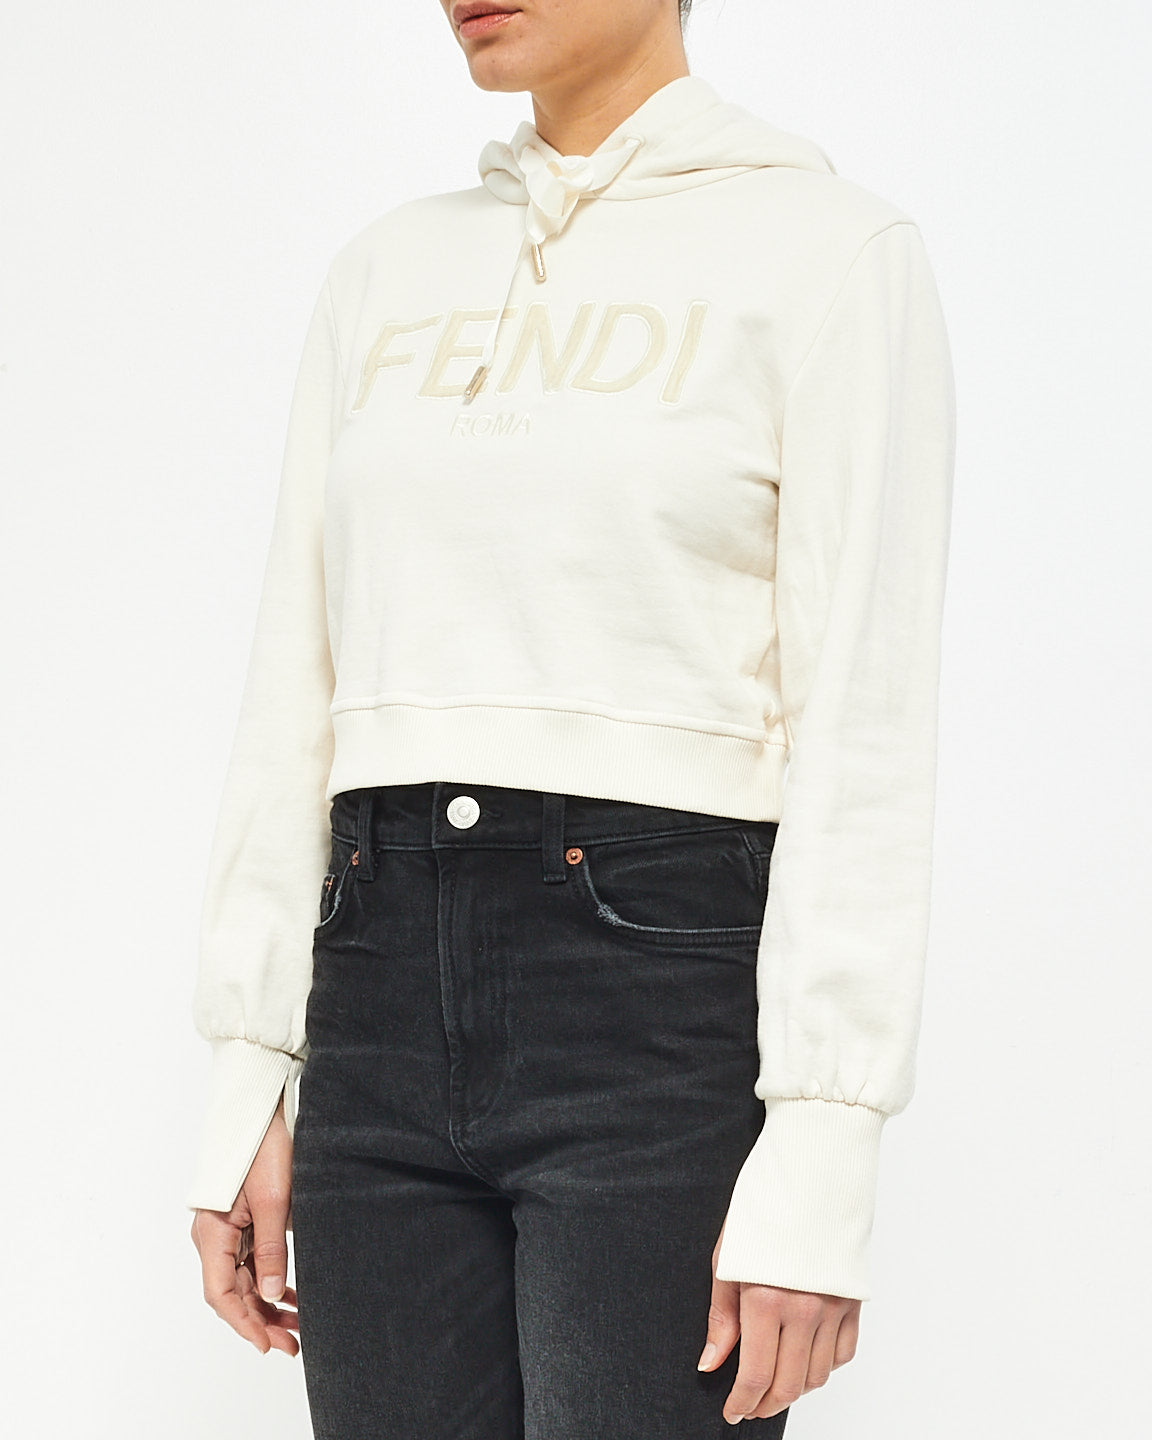 Fendi White Logo Cropped Hoodie Sweatshirt - S